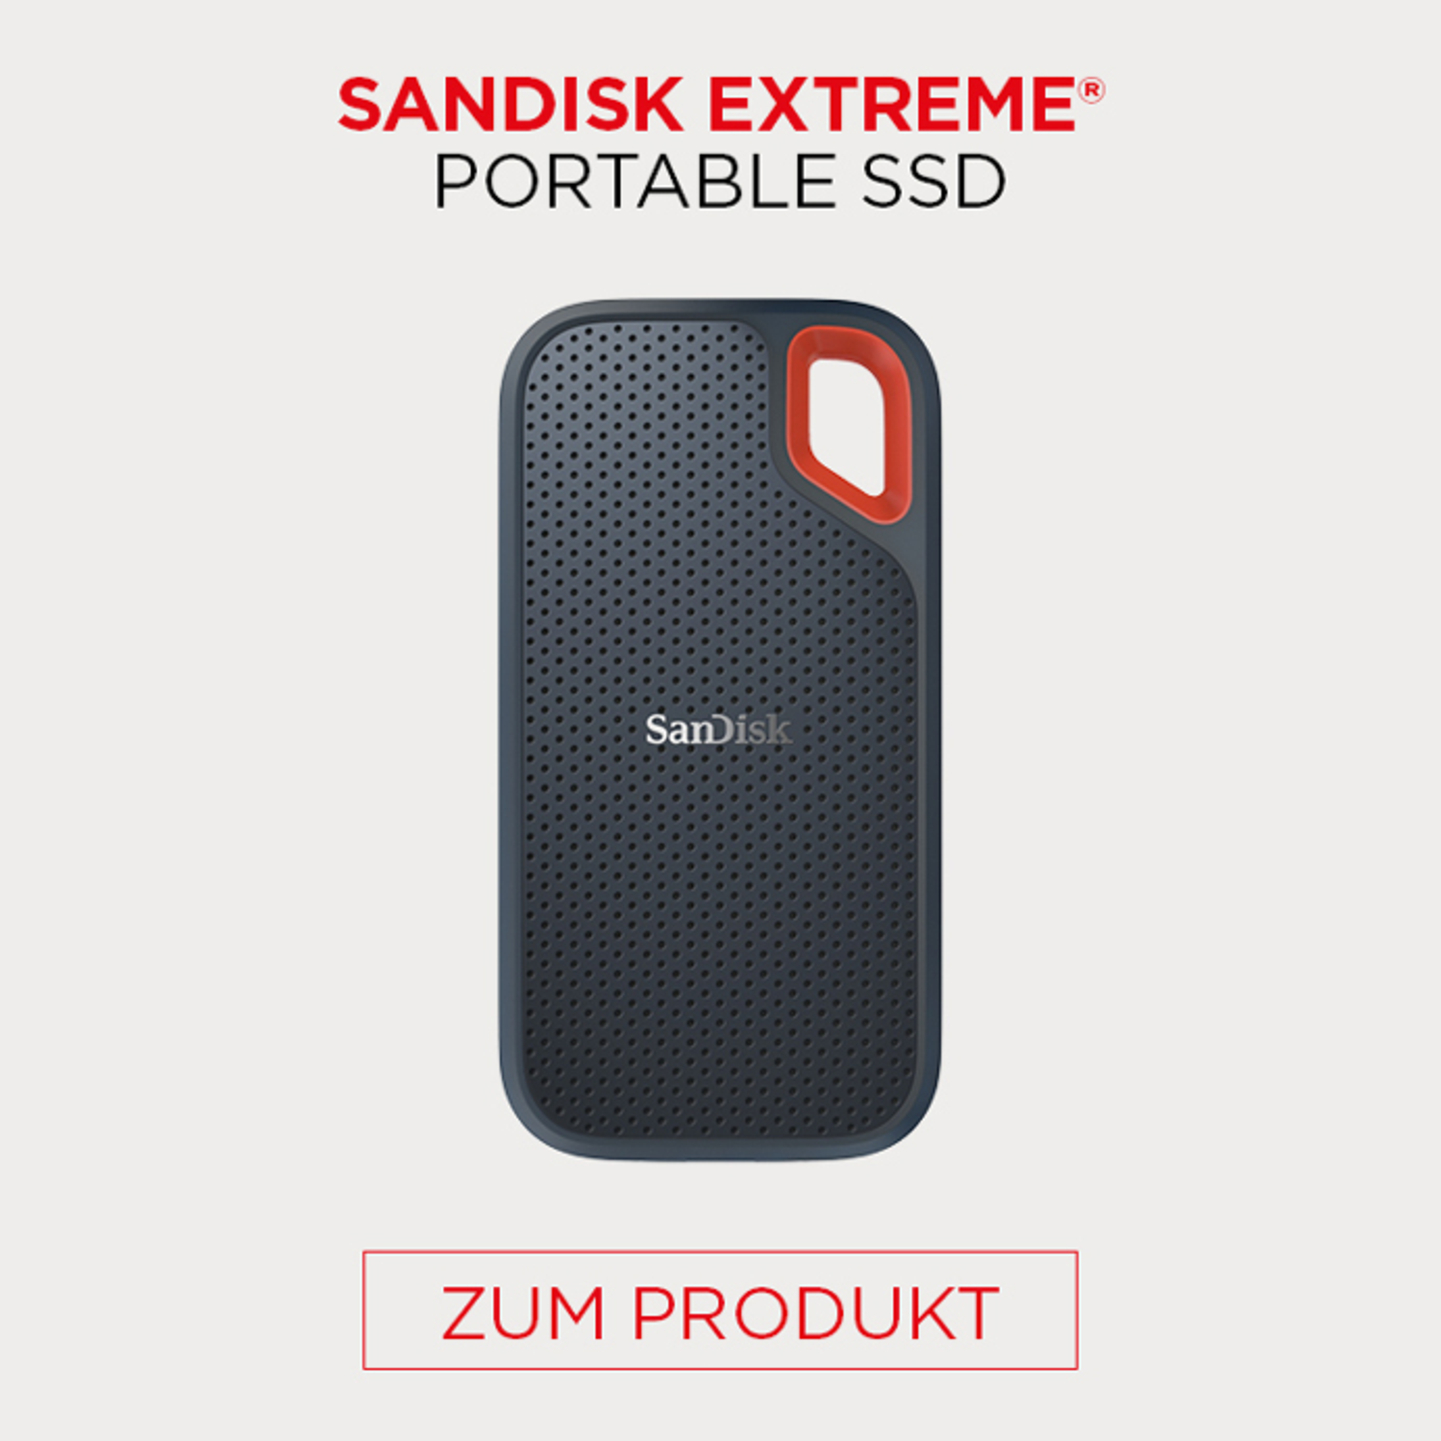 Sandisk Extreme Portable SSD